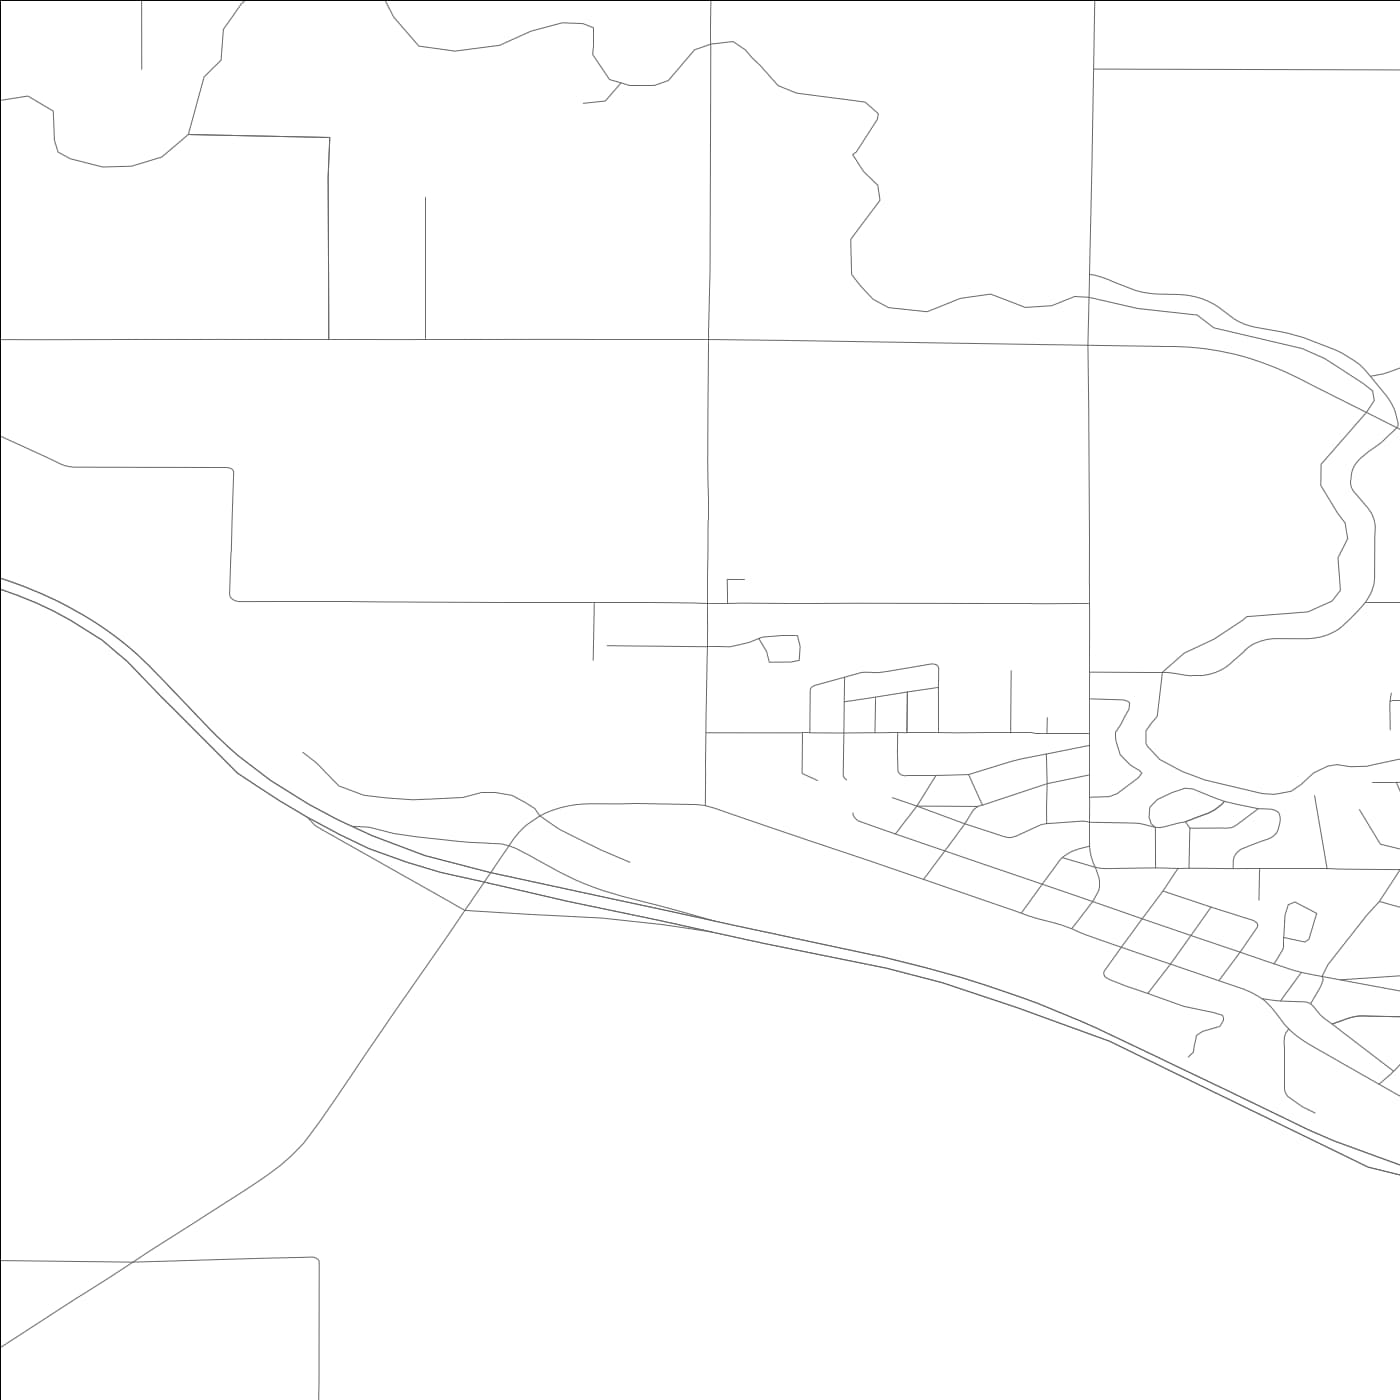 ROAD MAP OF ZILLAH, WASHINGTON BY MAPBAKES